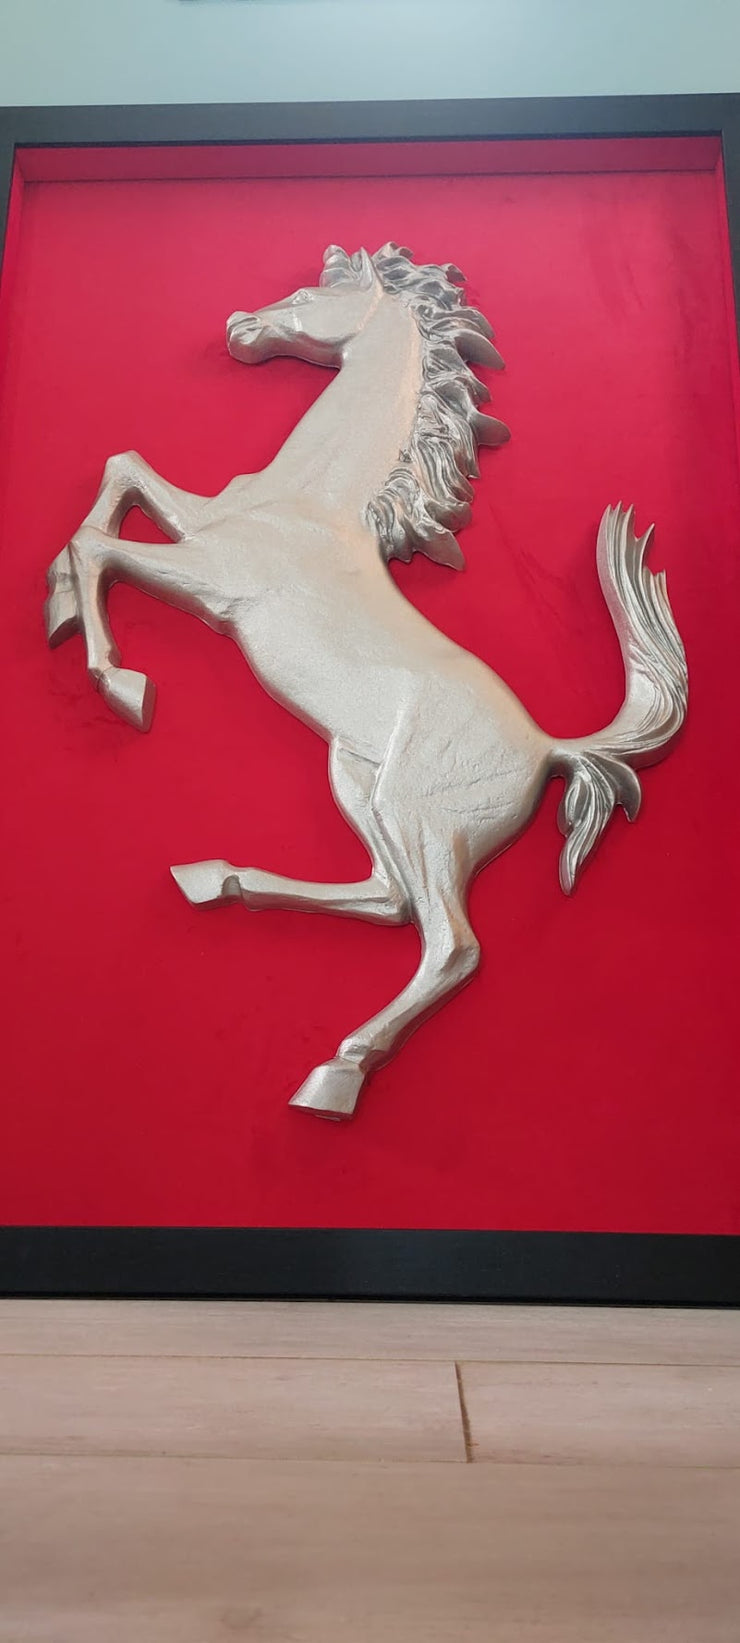 Original Ferrari factory Prancing horse framed